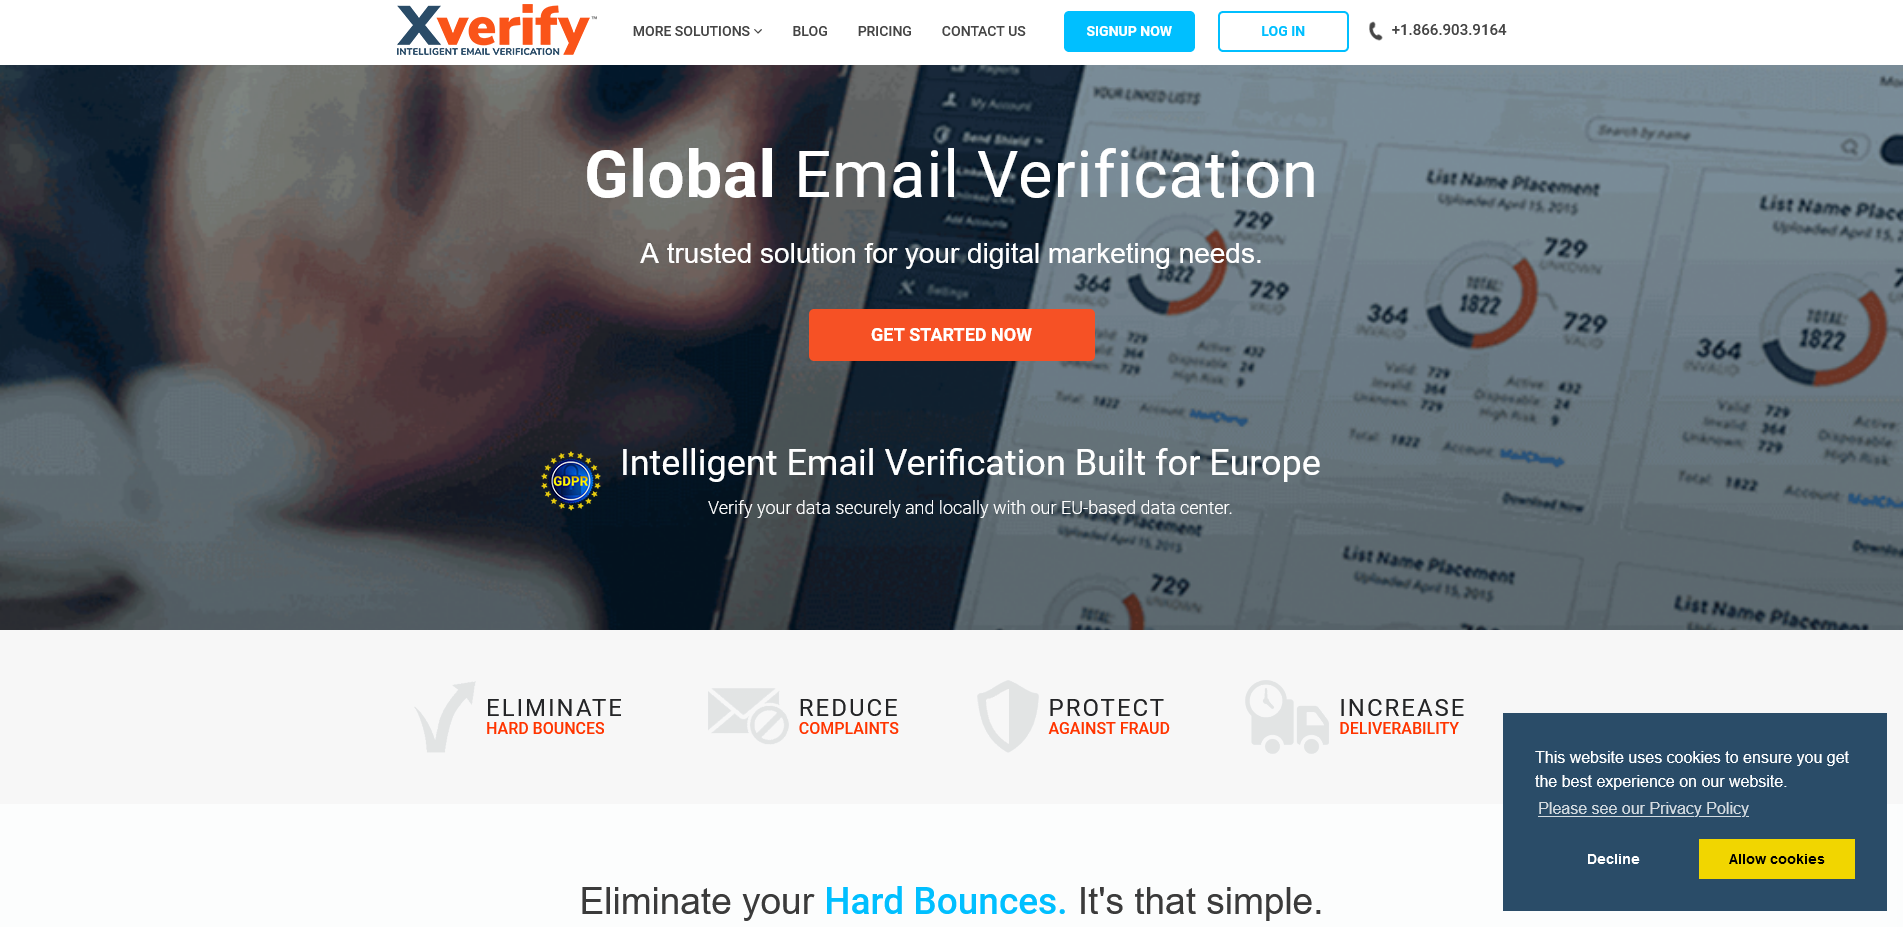 XVerify Email Verification Tool